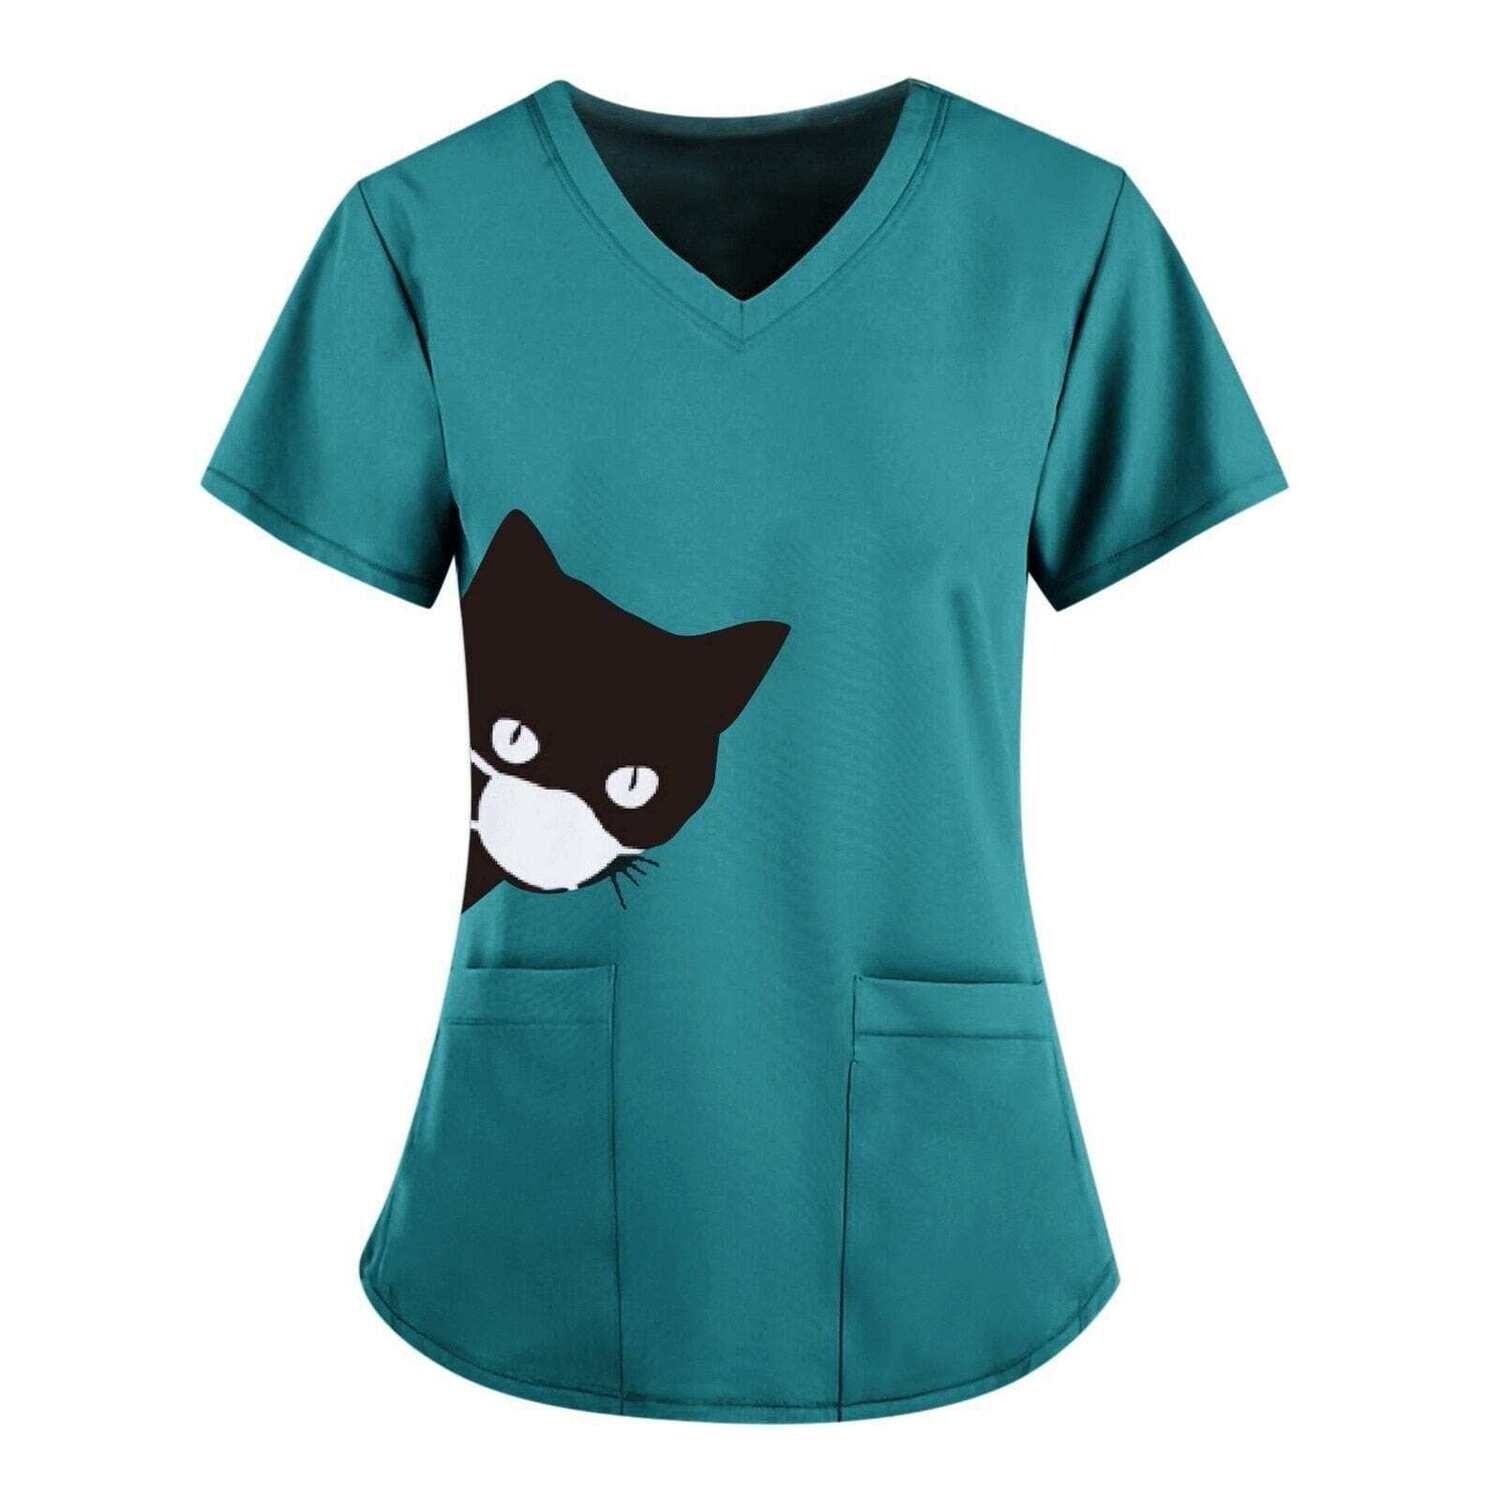 Unisex Working Uniform Black Cat Print Pocket Blouse Nurse Uniform Women Short Sleeve V-neck Scrub Tops Healthcare Carer Tunic